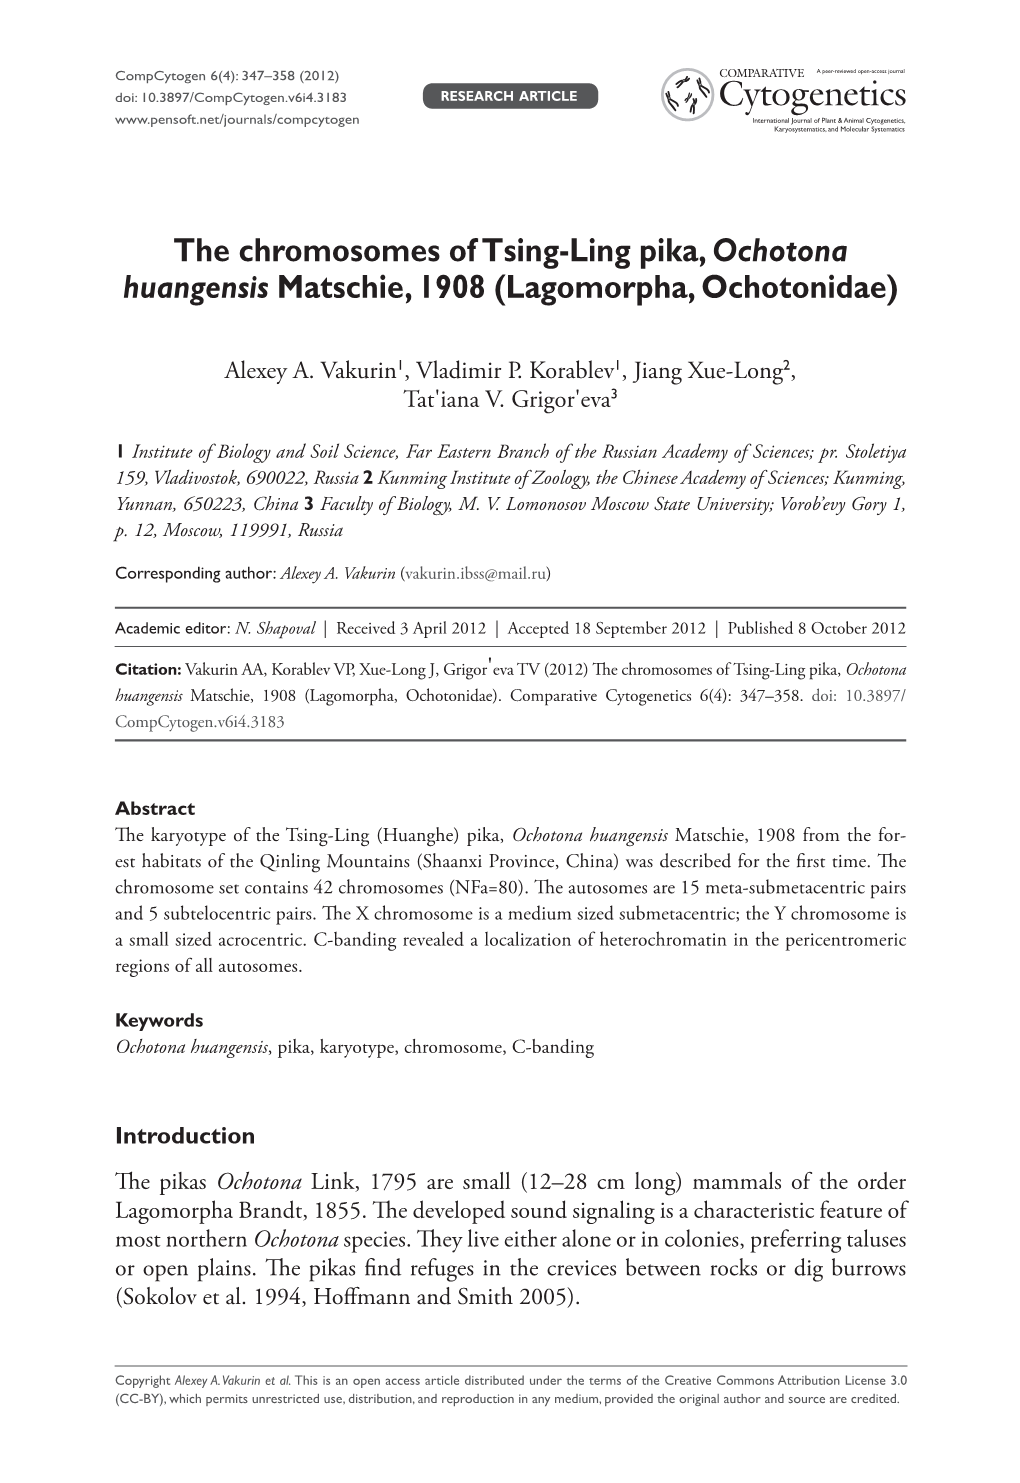 (Lagomorpha, Ochotonidae) Cytogenetics